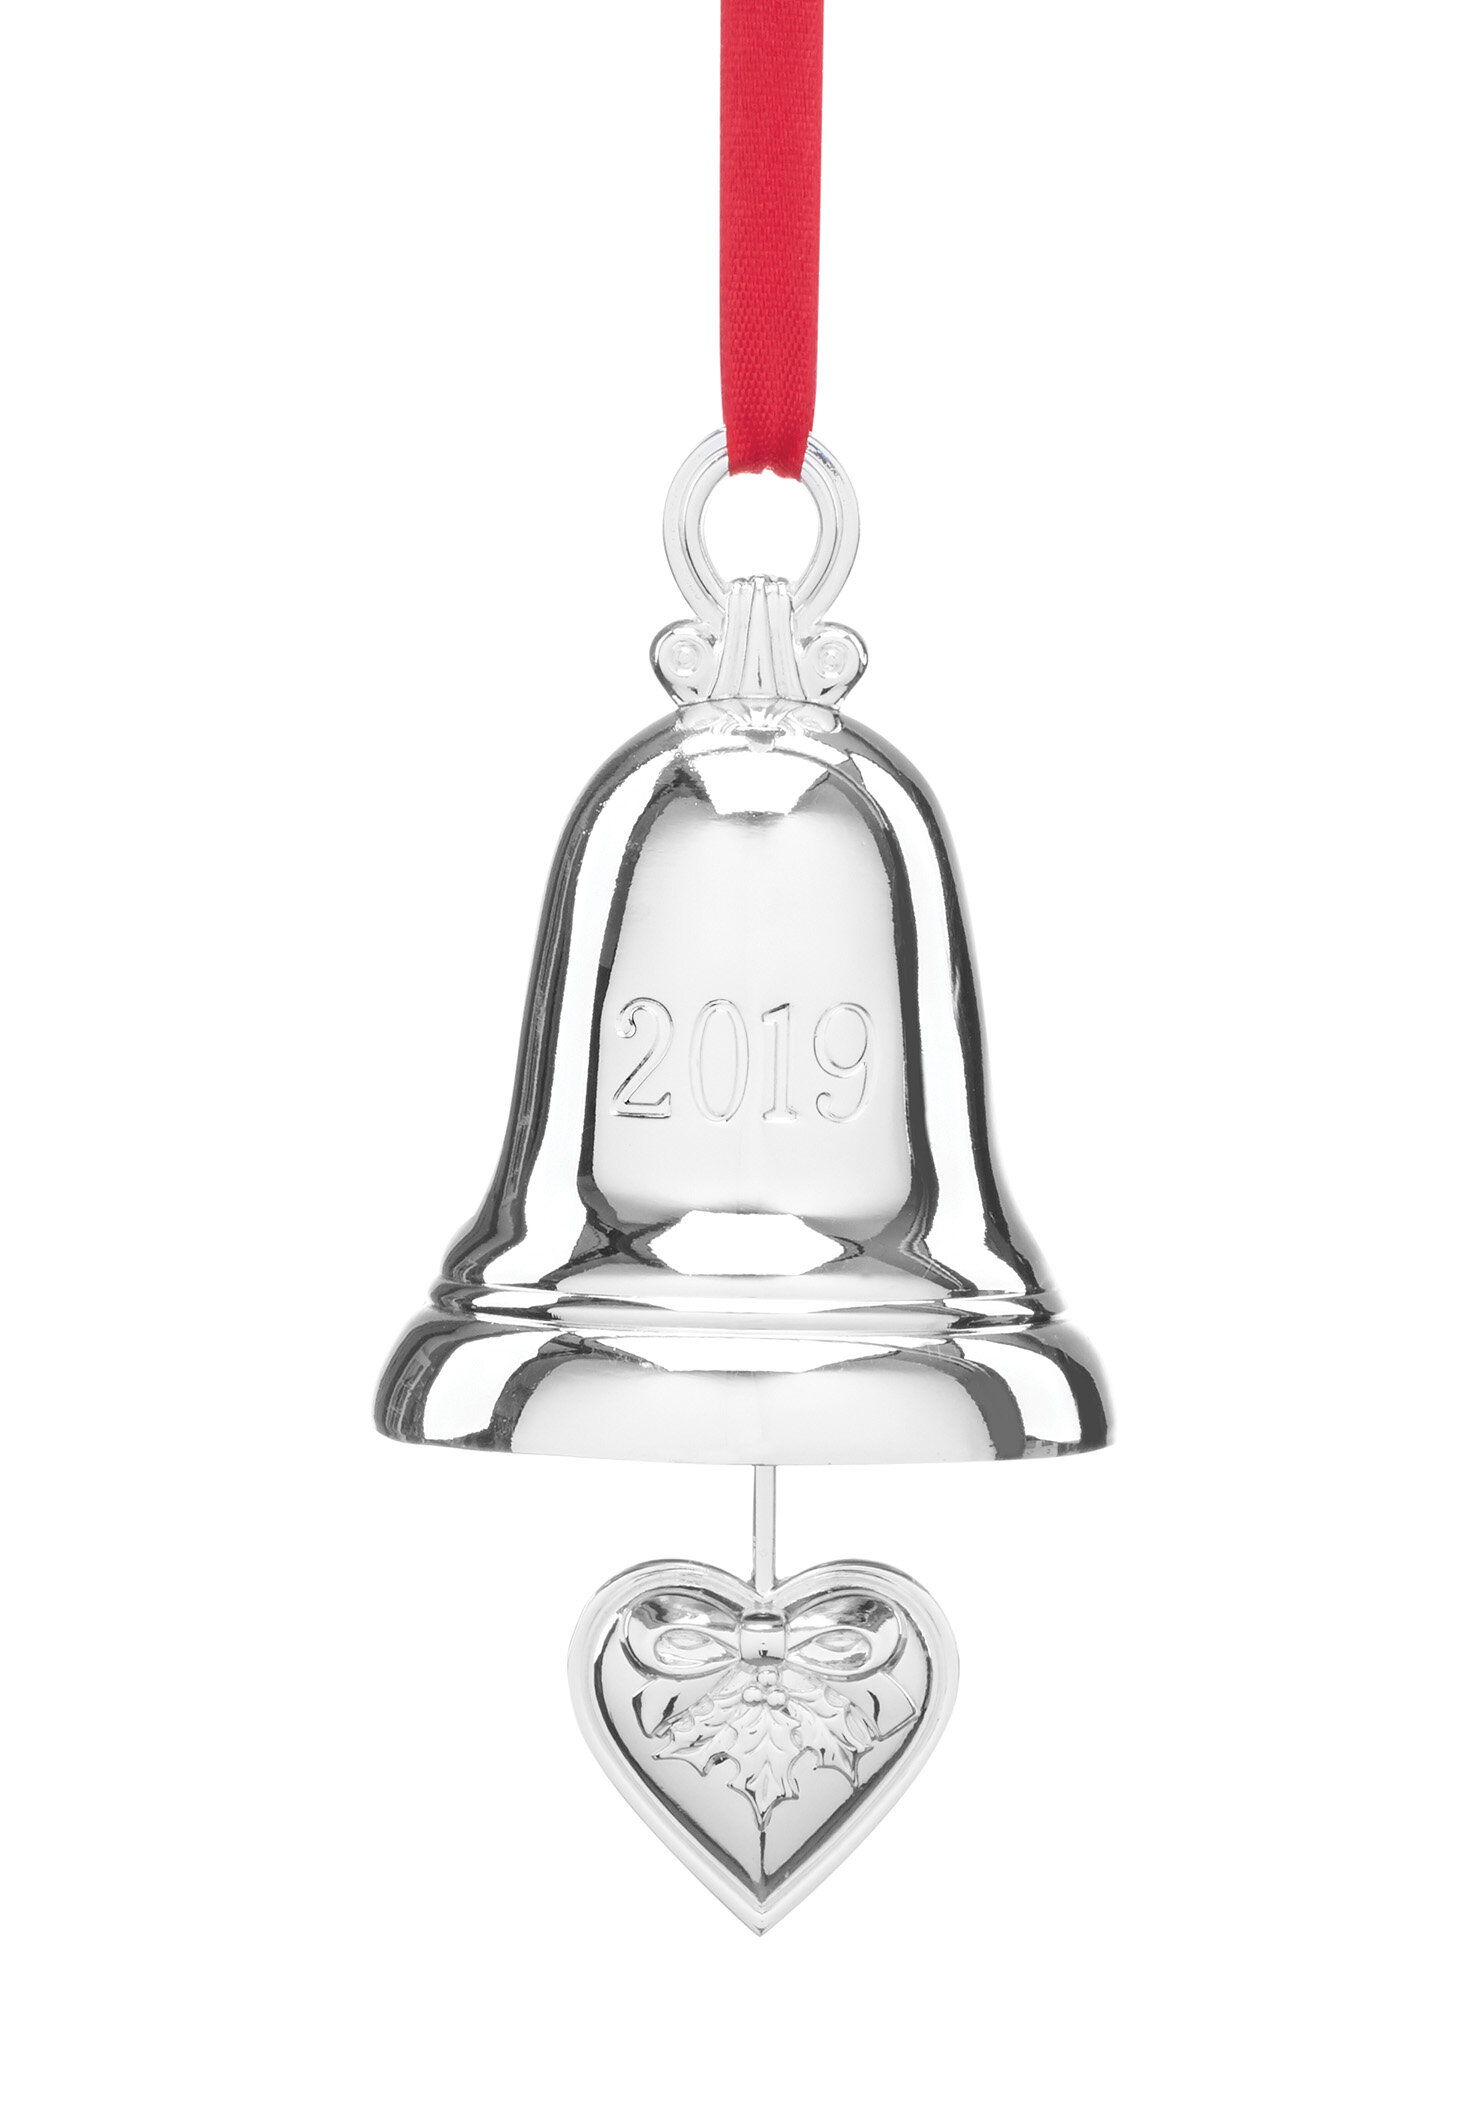 Lenox 2019 Annual Silver Bell